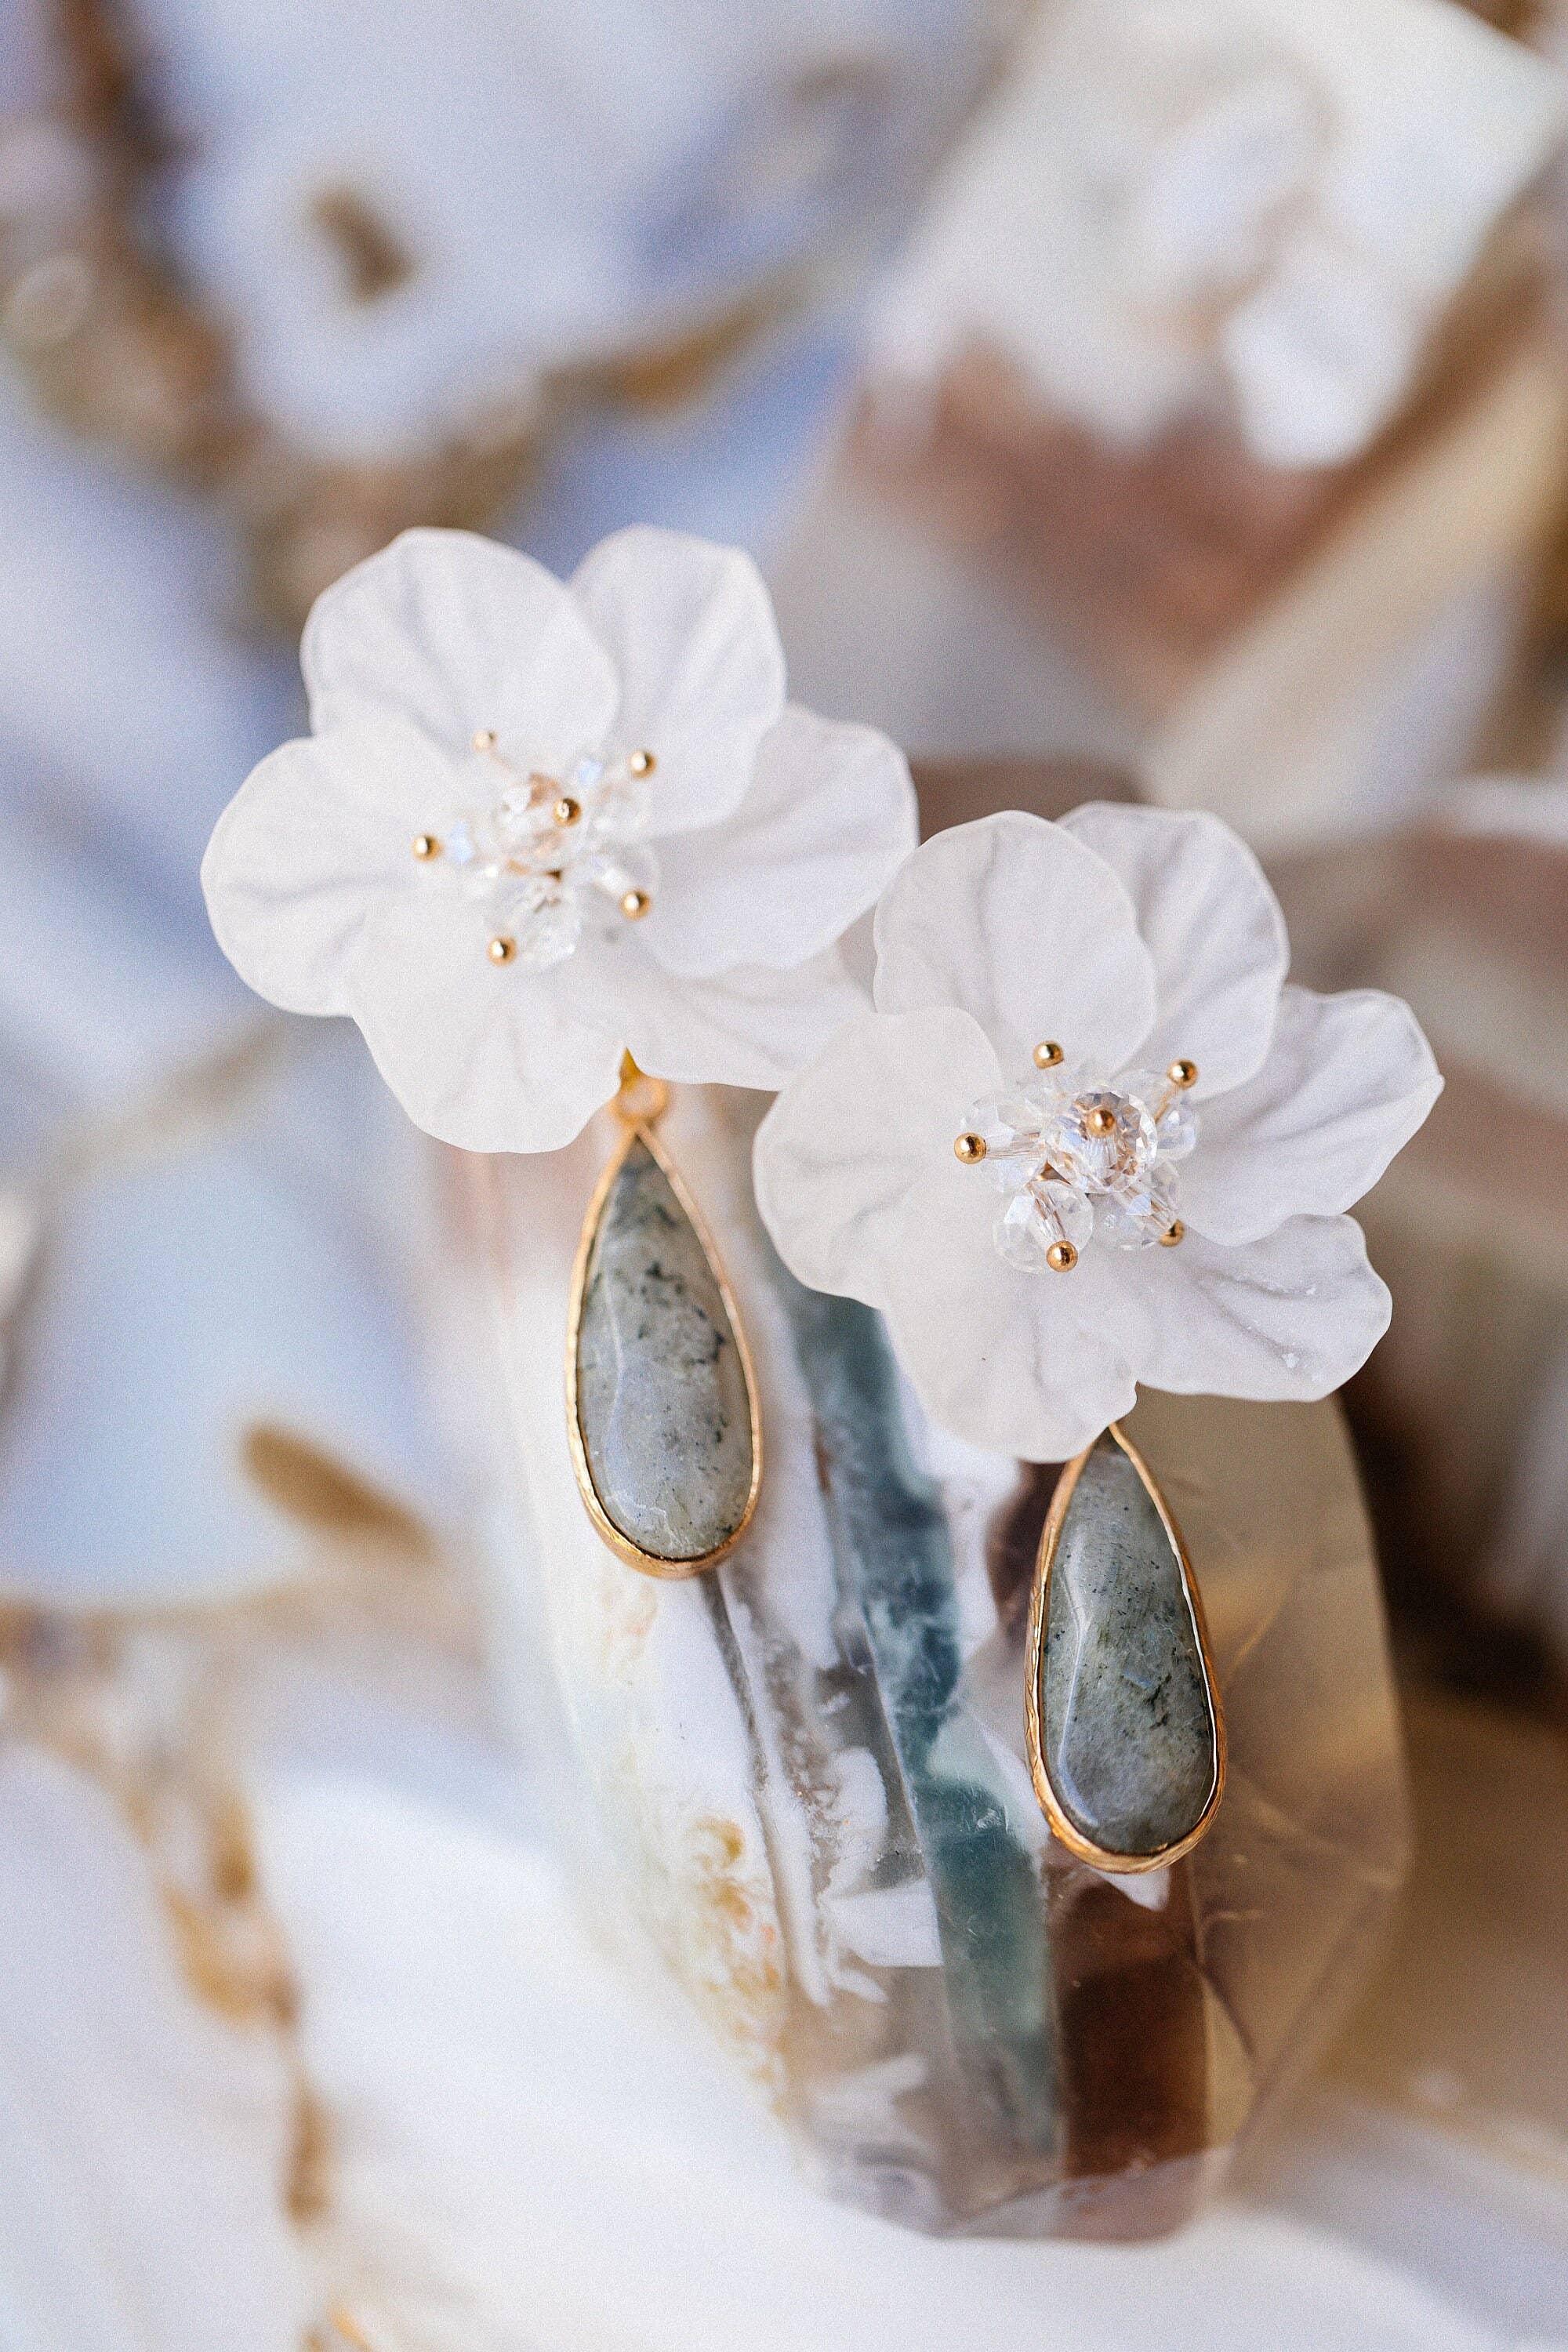 Crystal Bridal Earrings - White Wedding Earrings - Pretty Crafty Lady Shop